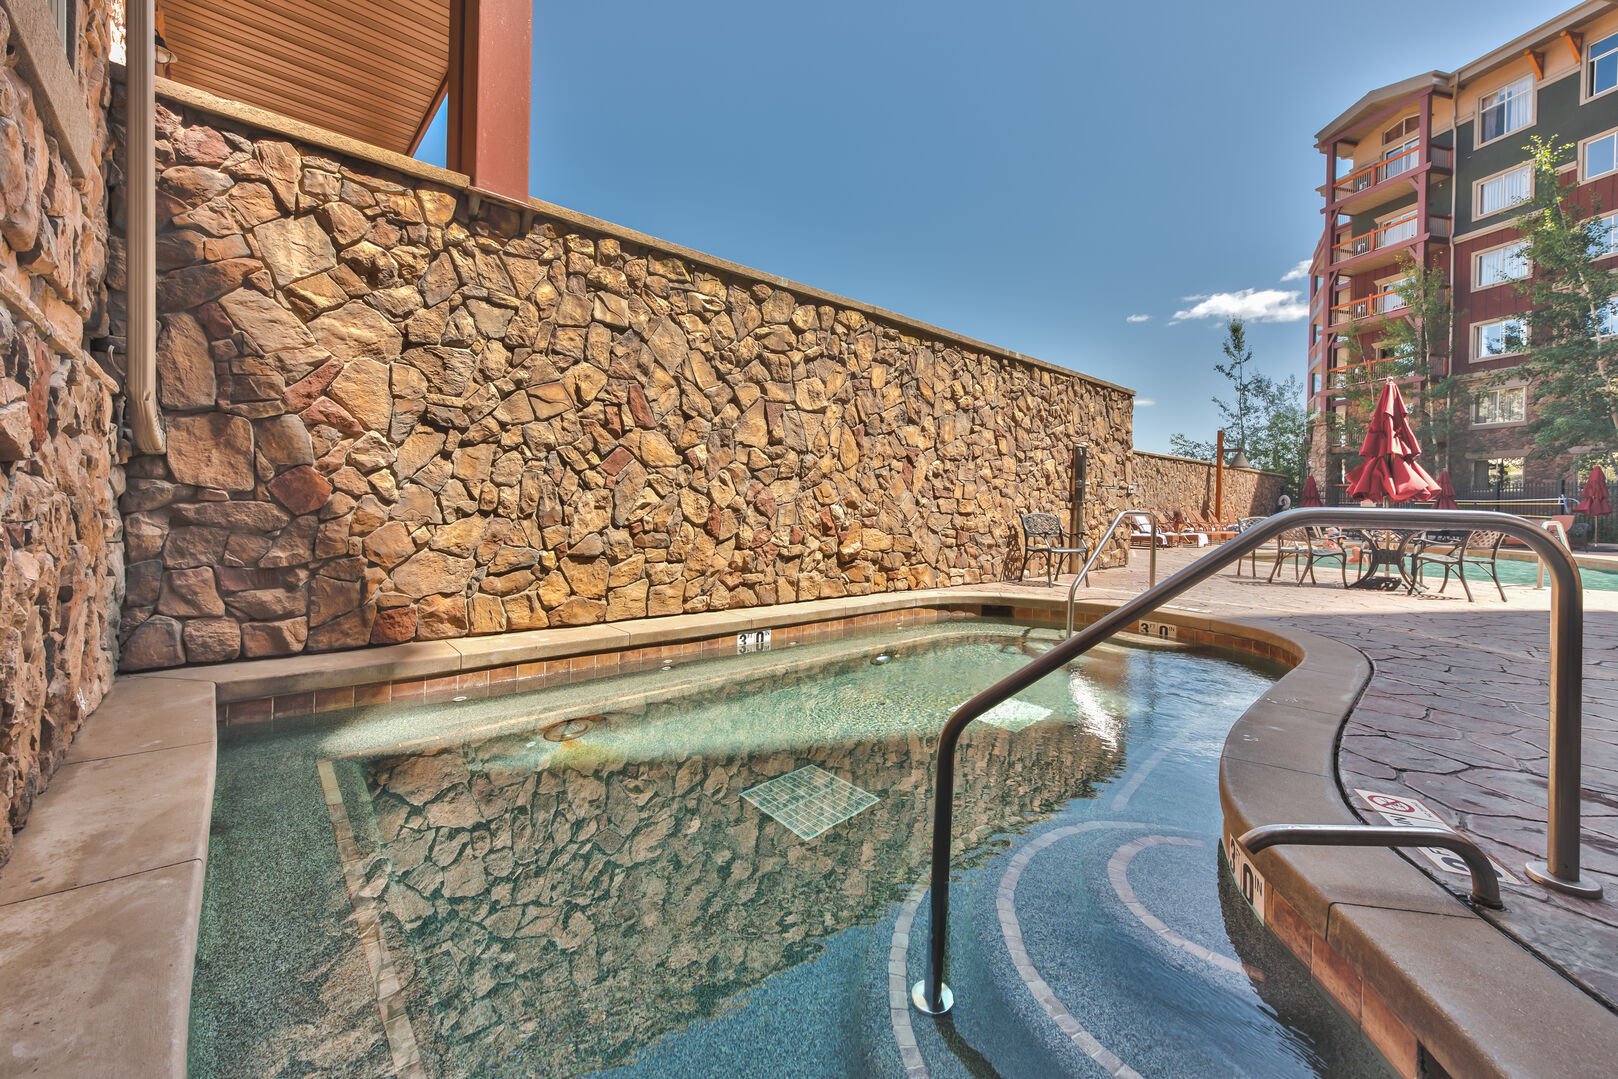 Communal hot tub at Westgate Resort.